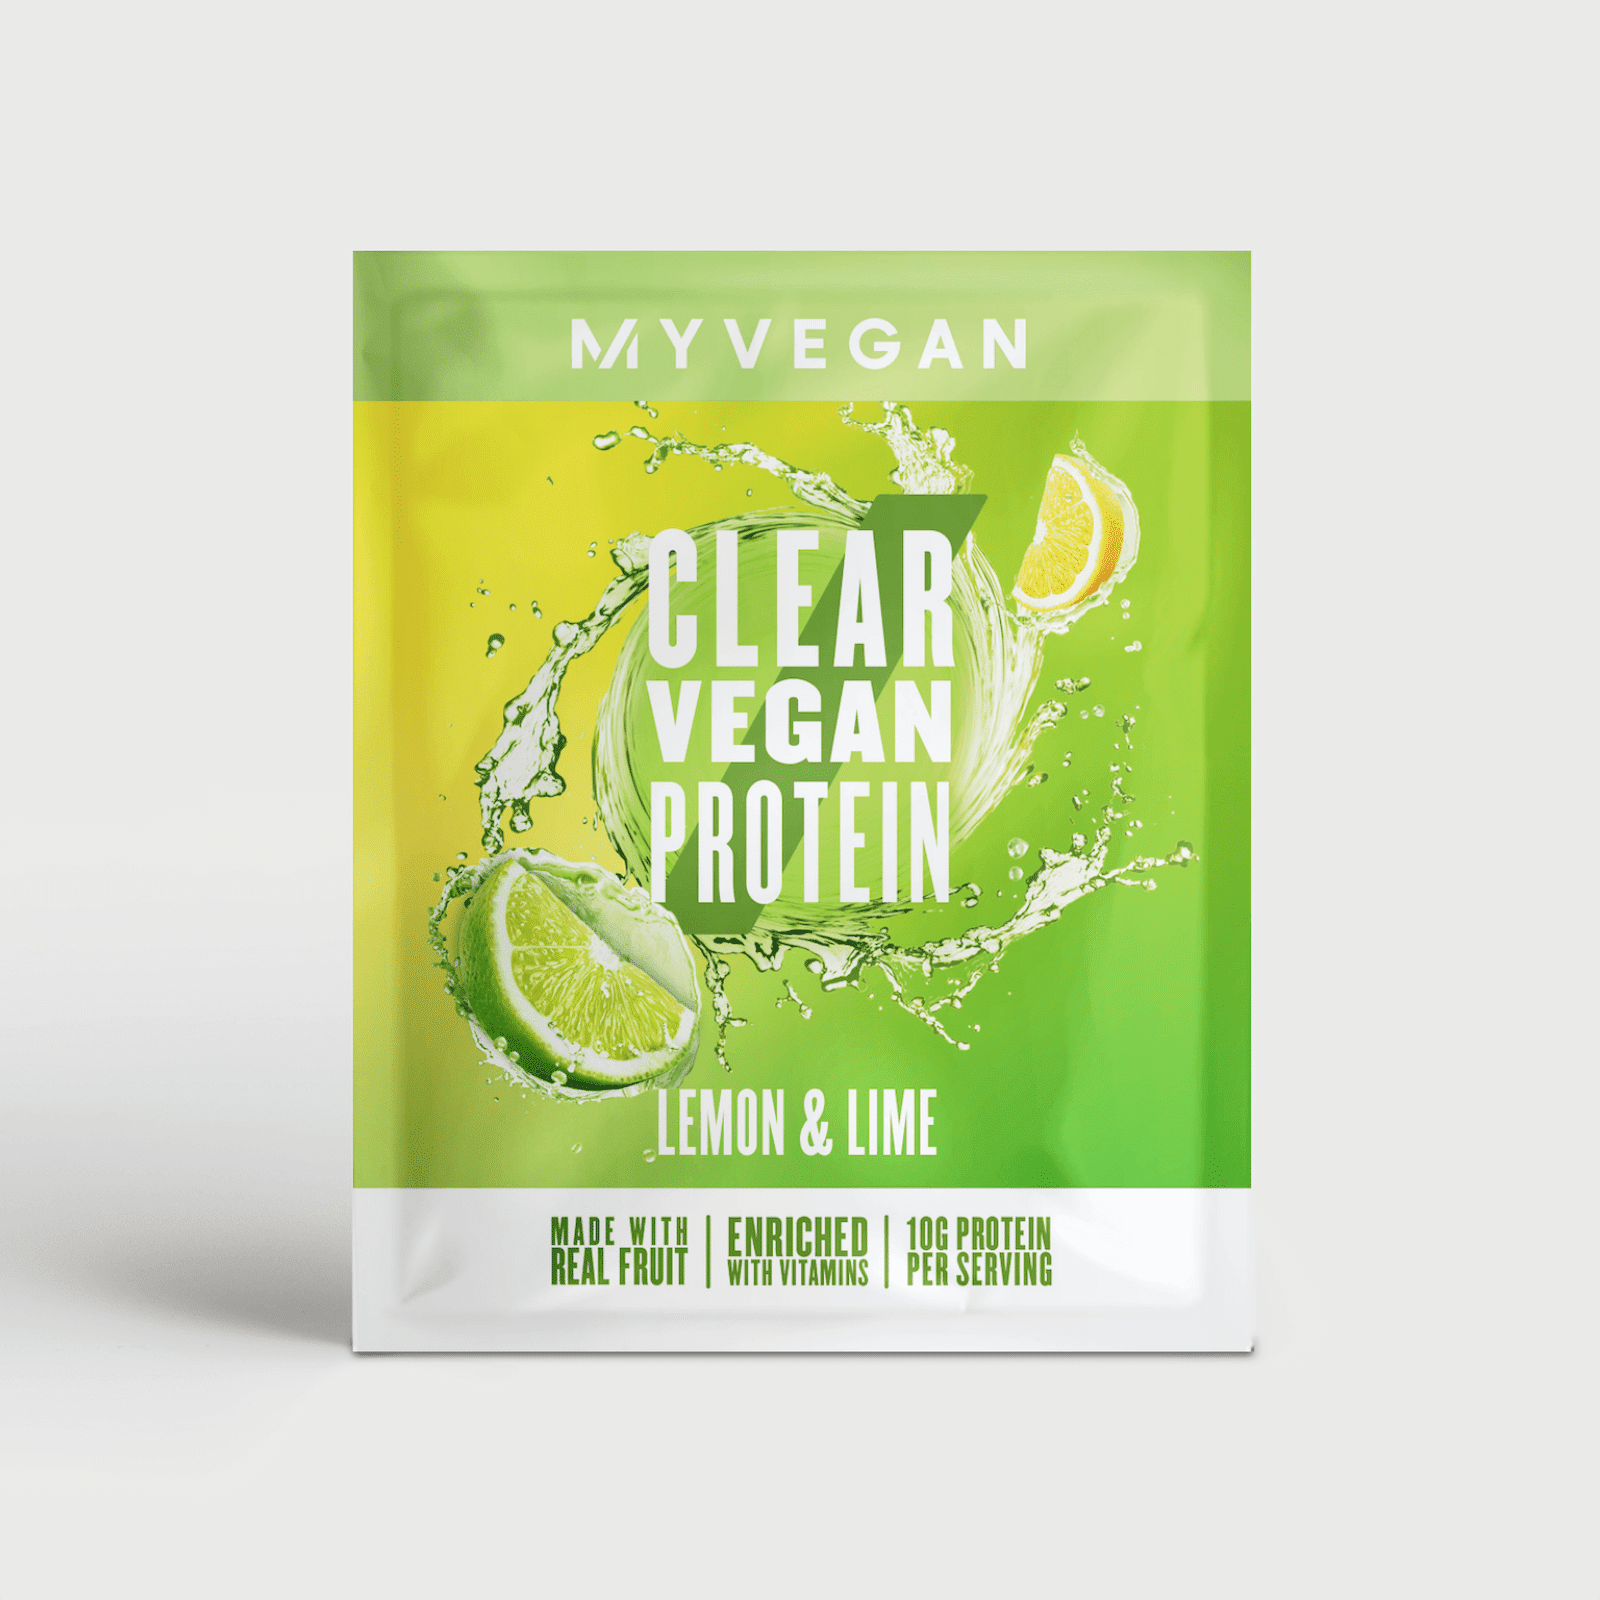 Myvegan Clear Vegan Protein (Sample) - 16g - Lemon & Lime